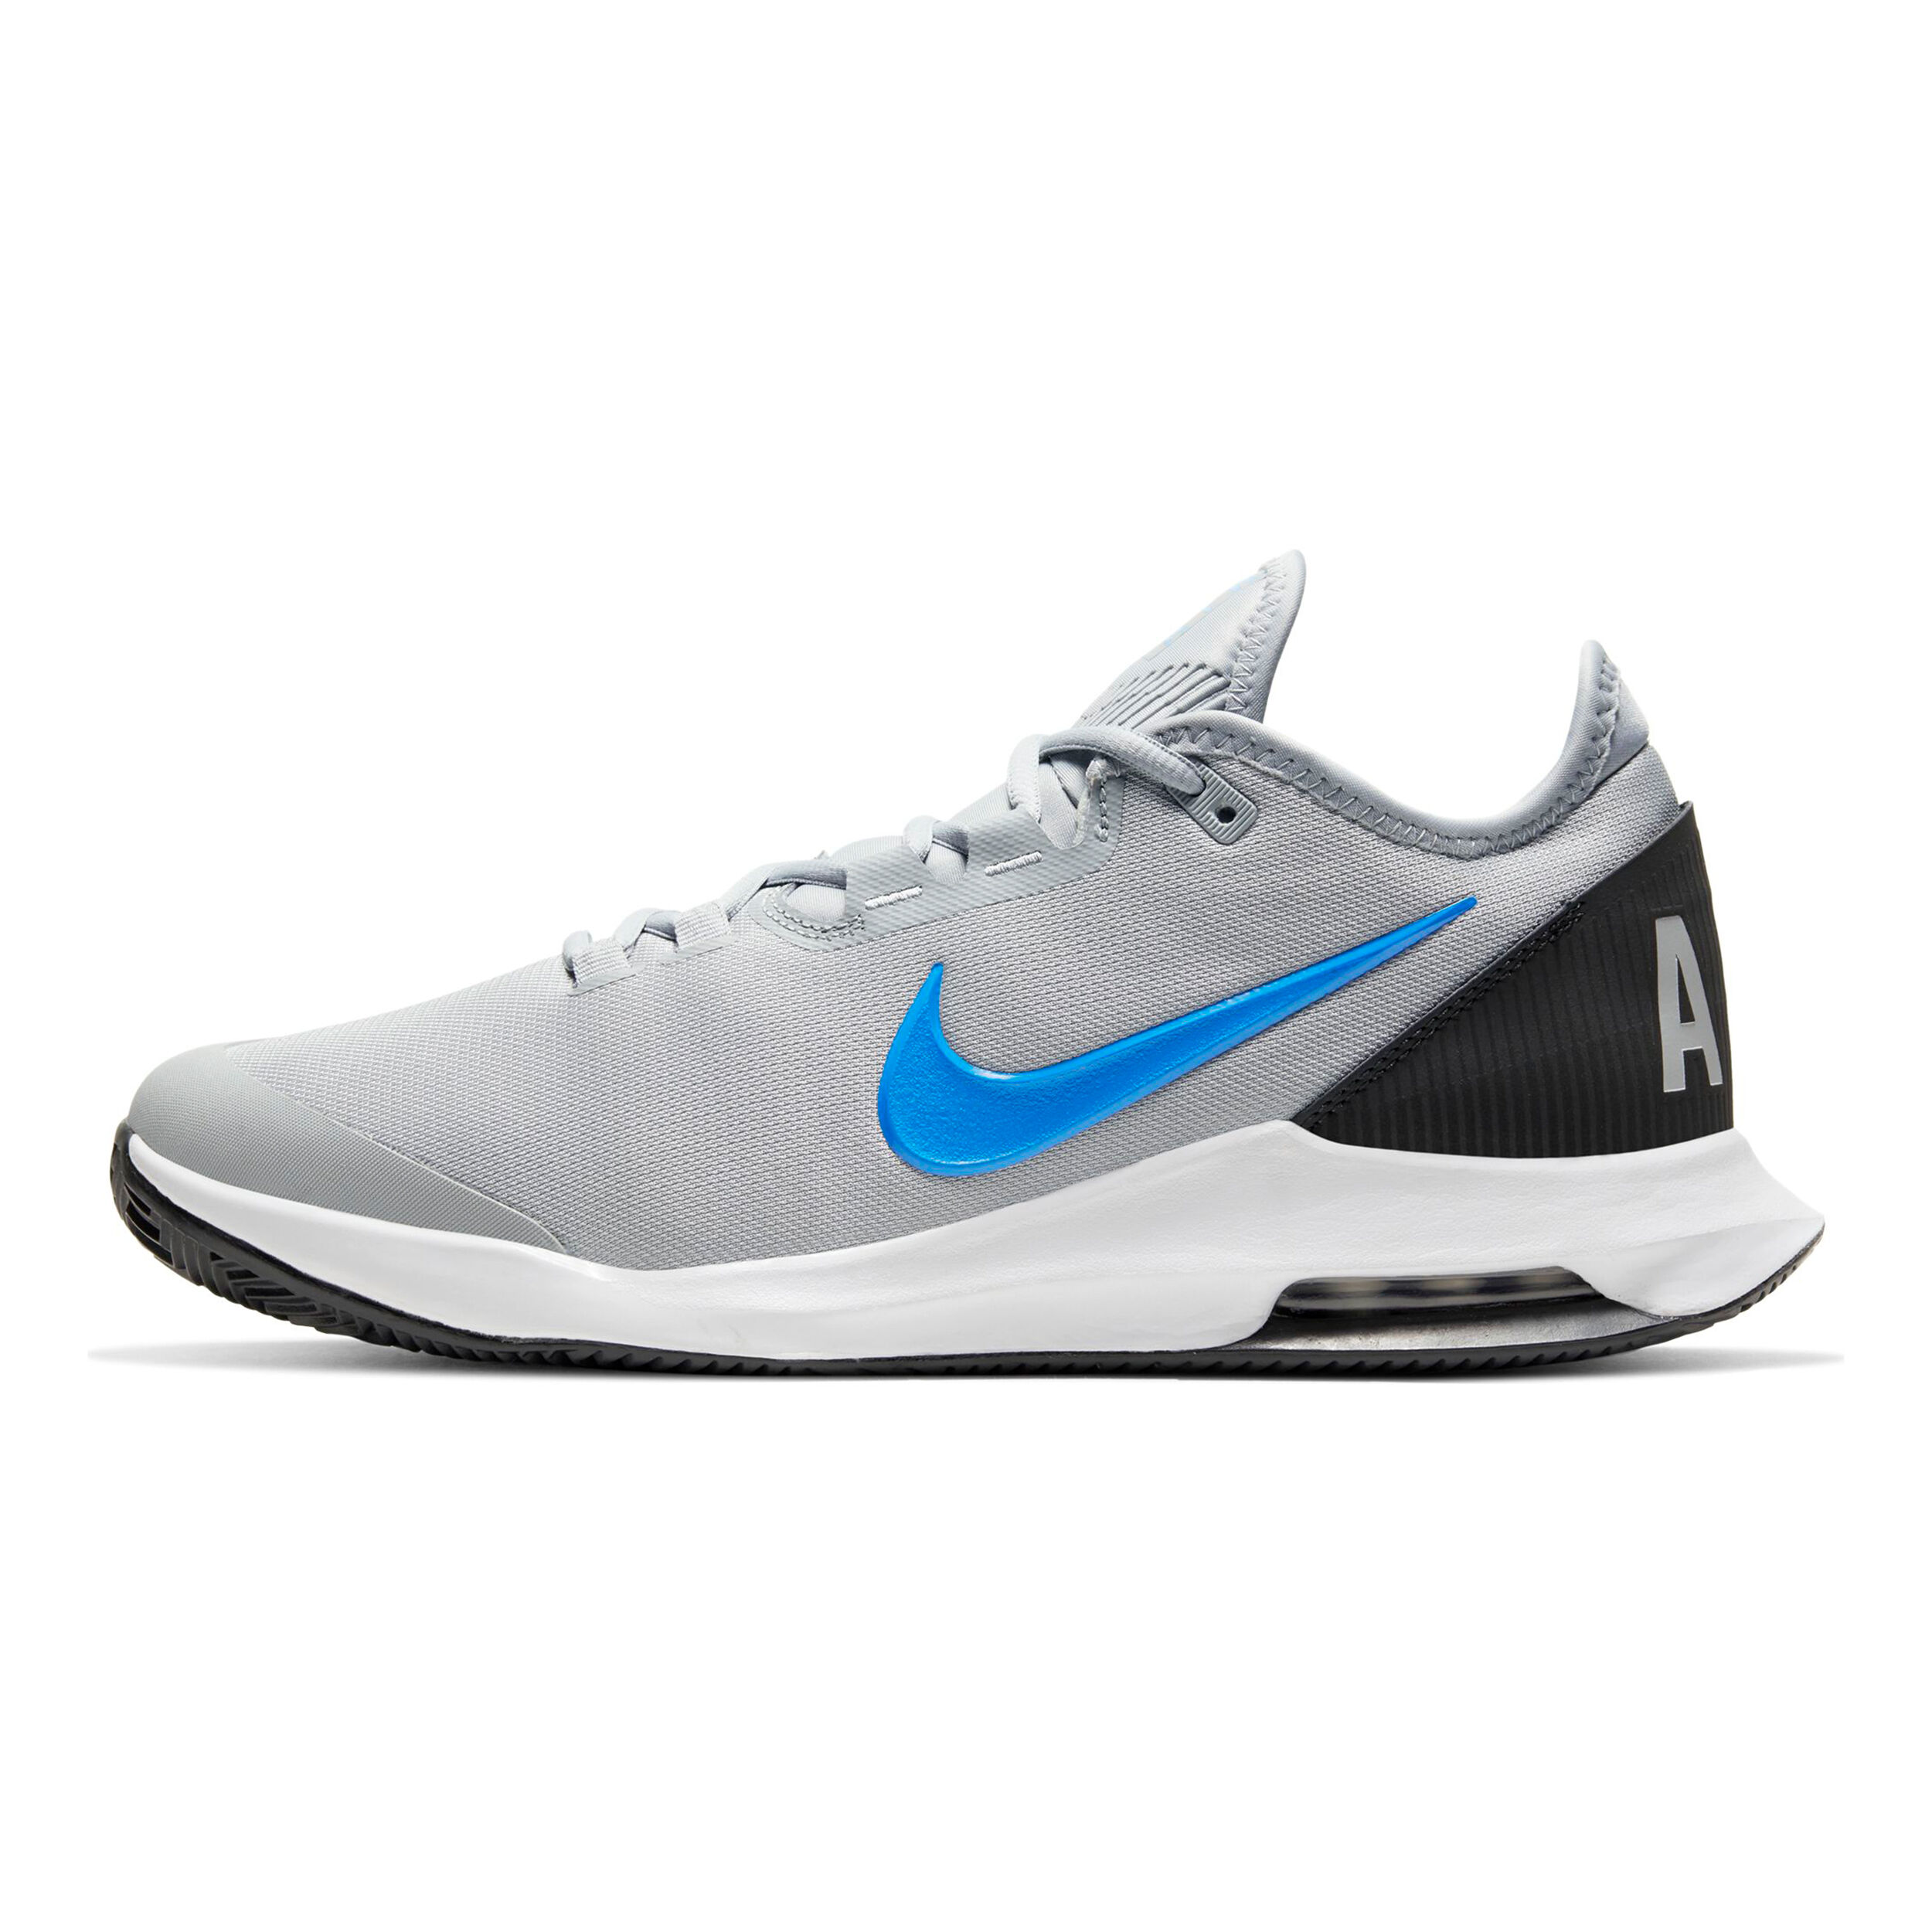 buy Nike Air Max Wildcard Clay Court Shoe Men - Grey, White online ... صور سوق